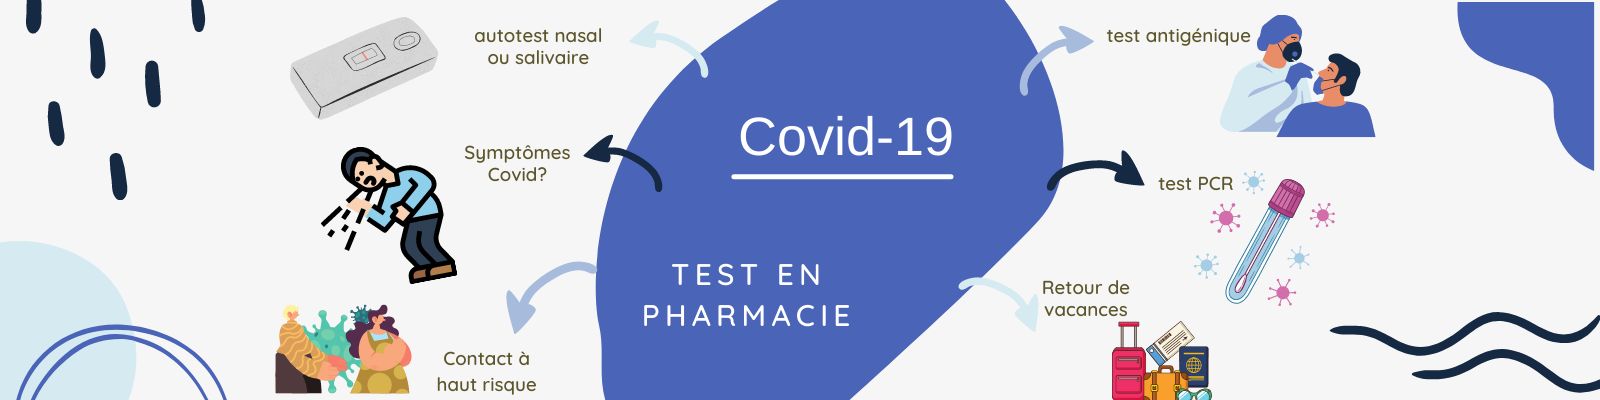 Test Covid-19 en pharmacie